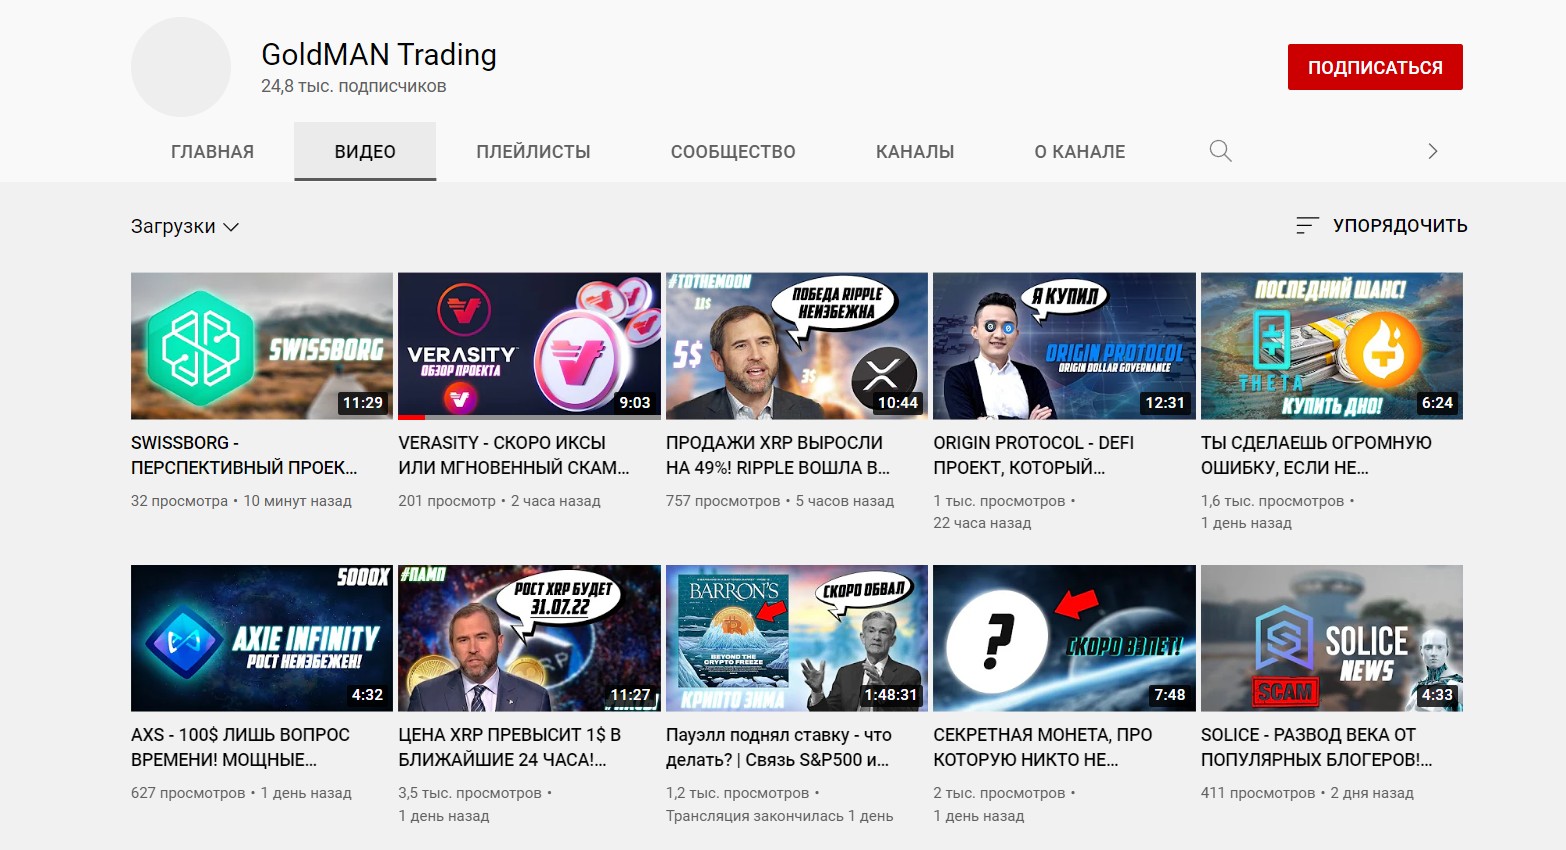 Канал YouTube GoldMAN Trading